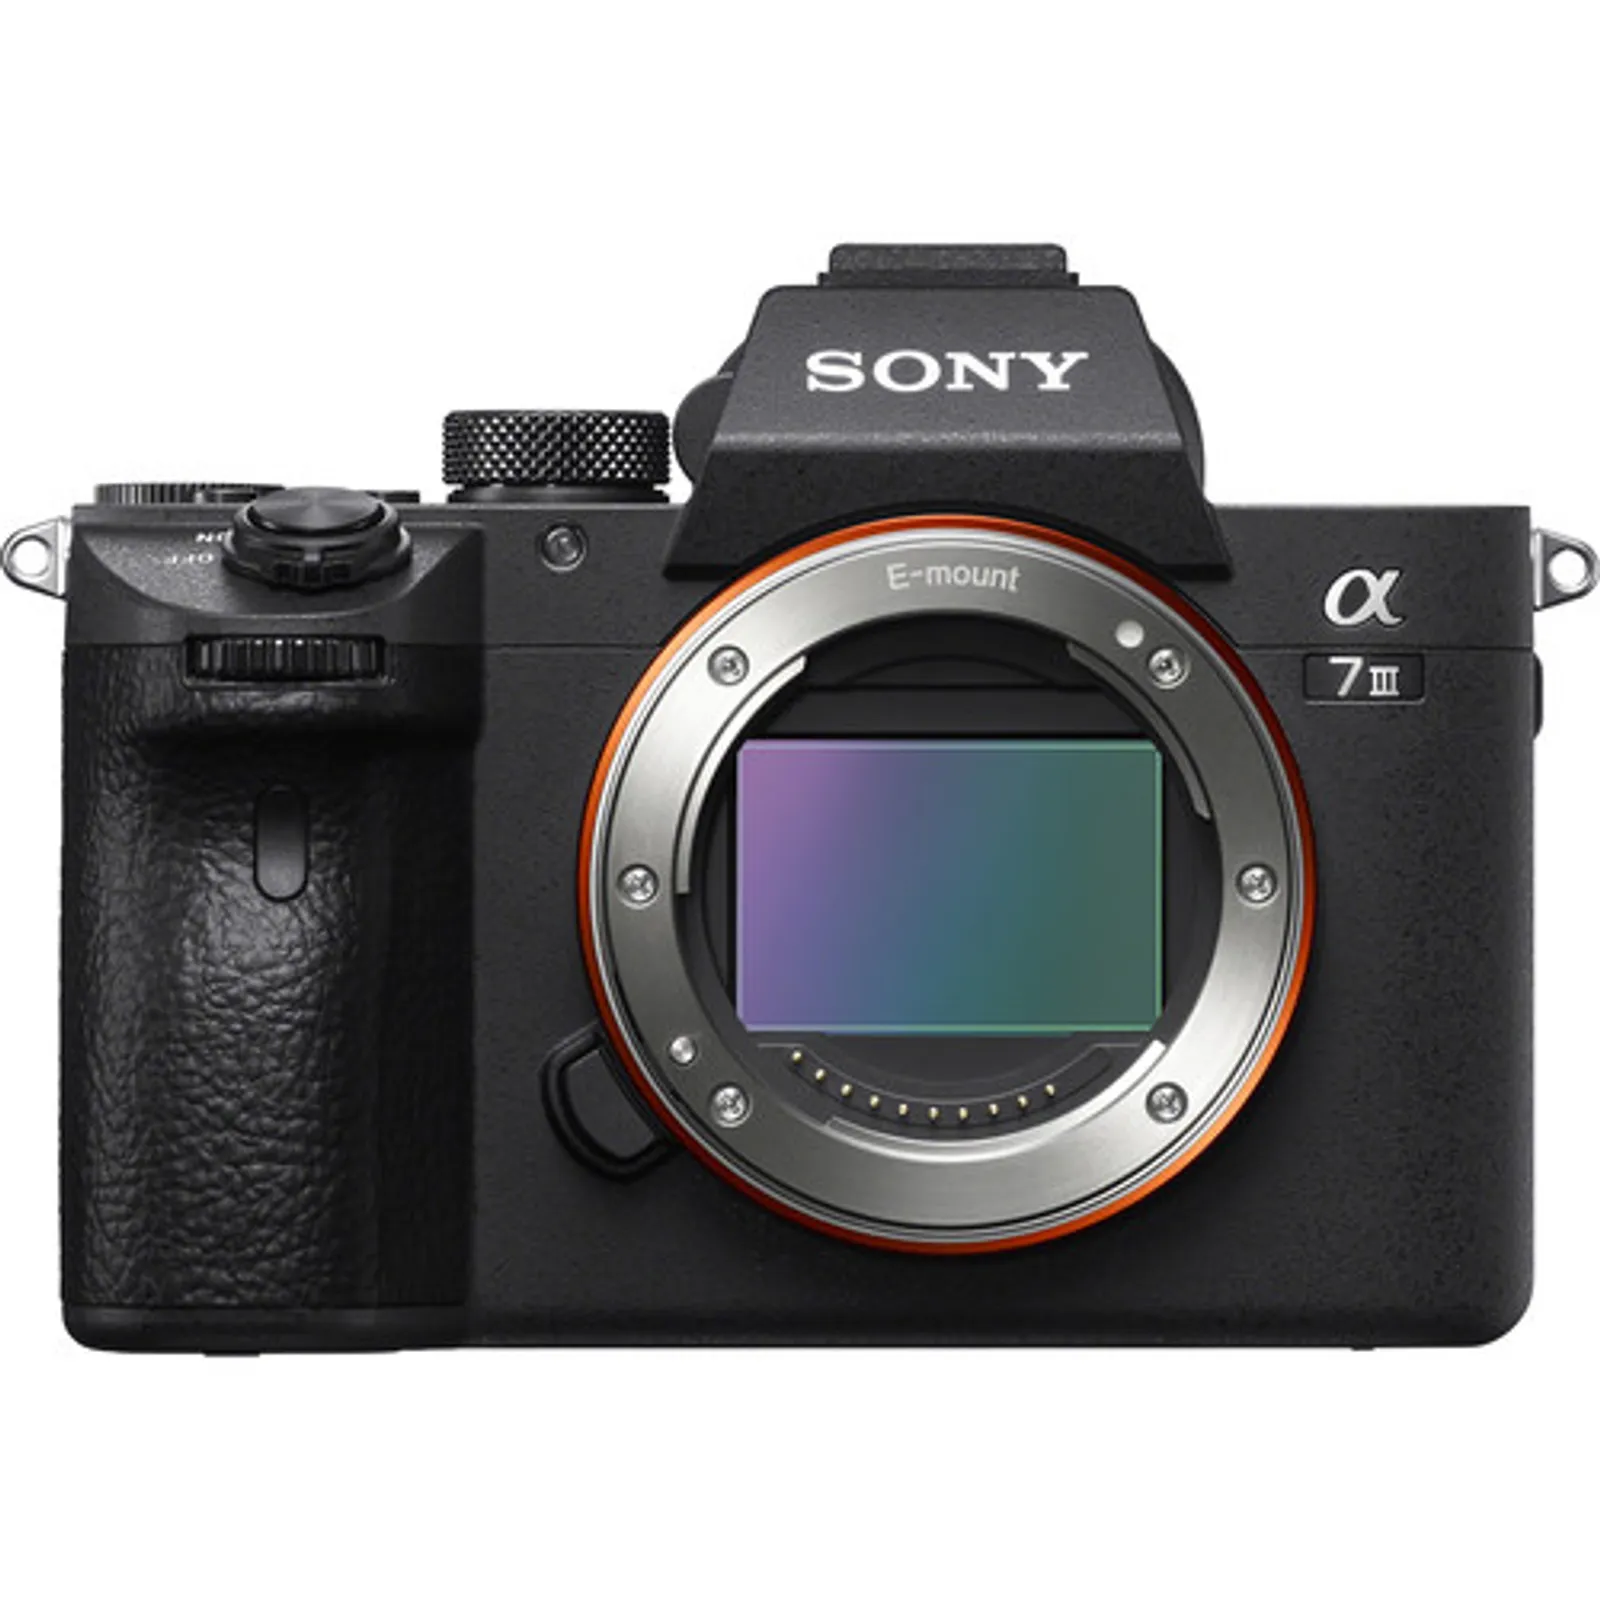 Sony a7 III Digital Camera